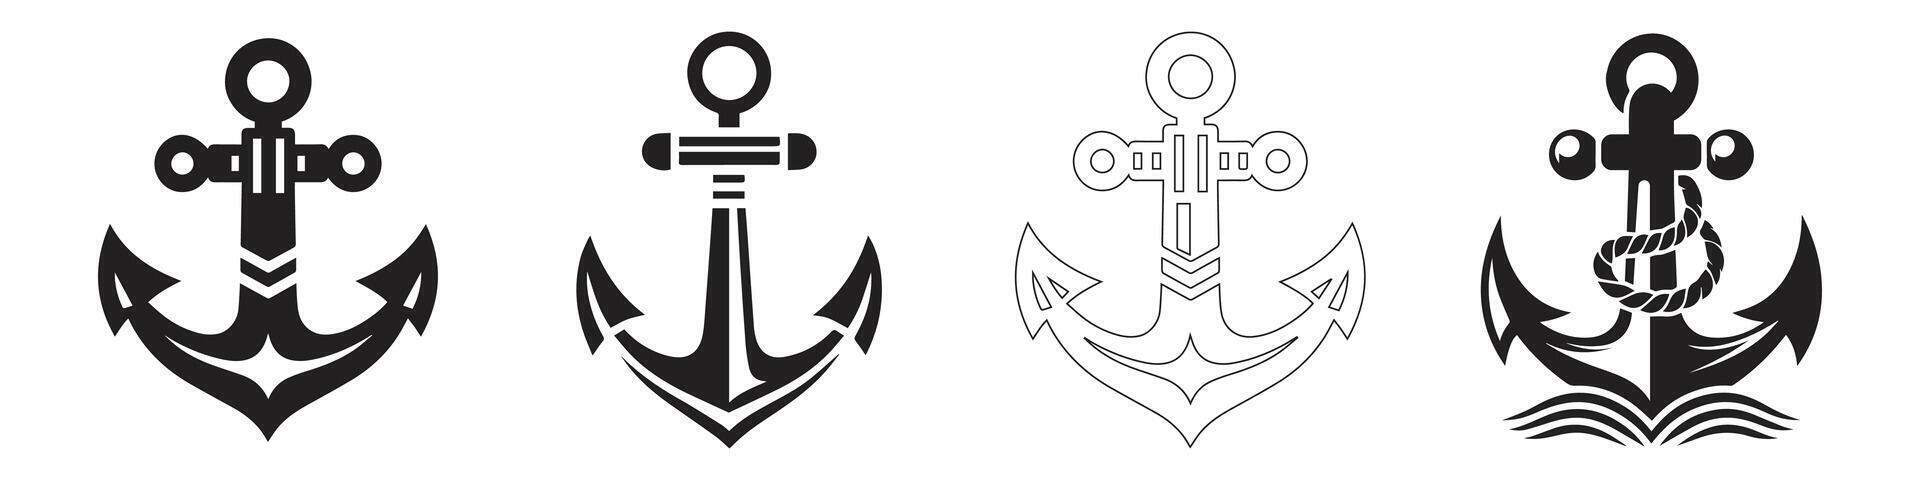 Anchor icon. Anchor Flat icon symbol Vector. Anchor icon set. Anchor symbol set. Anchor marine icon. simple illustration graphic doodle black design vector